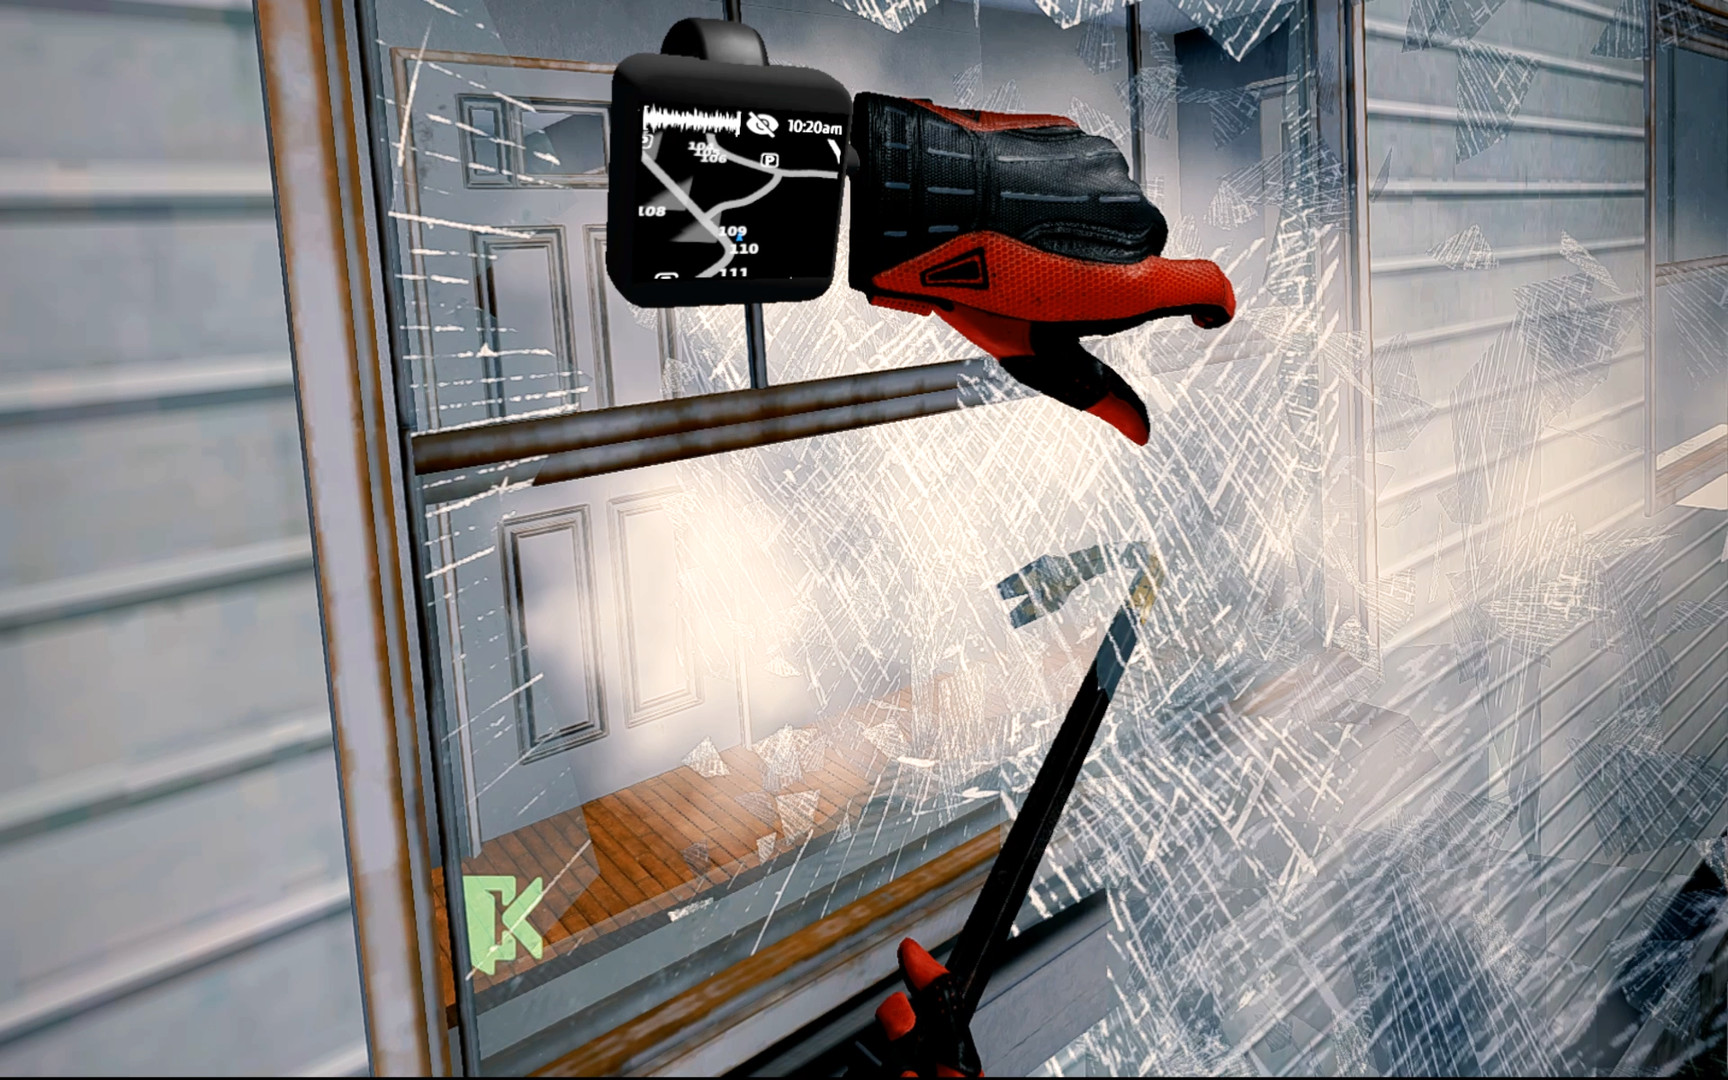 Thief Simulator VR Free Download